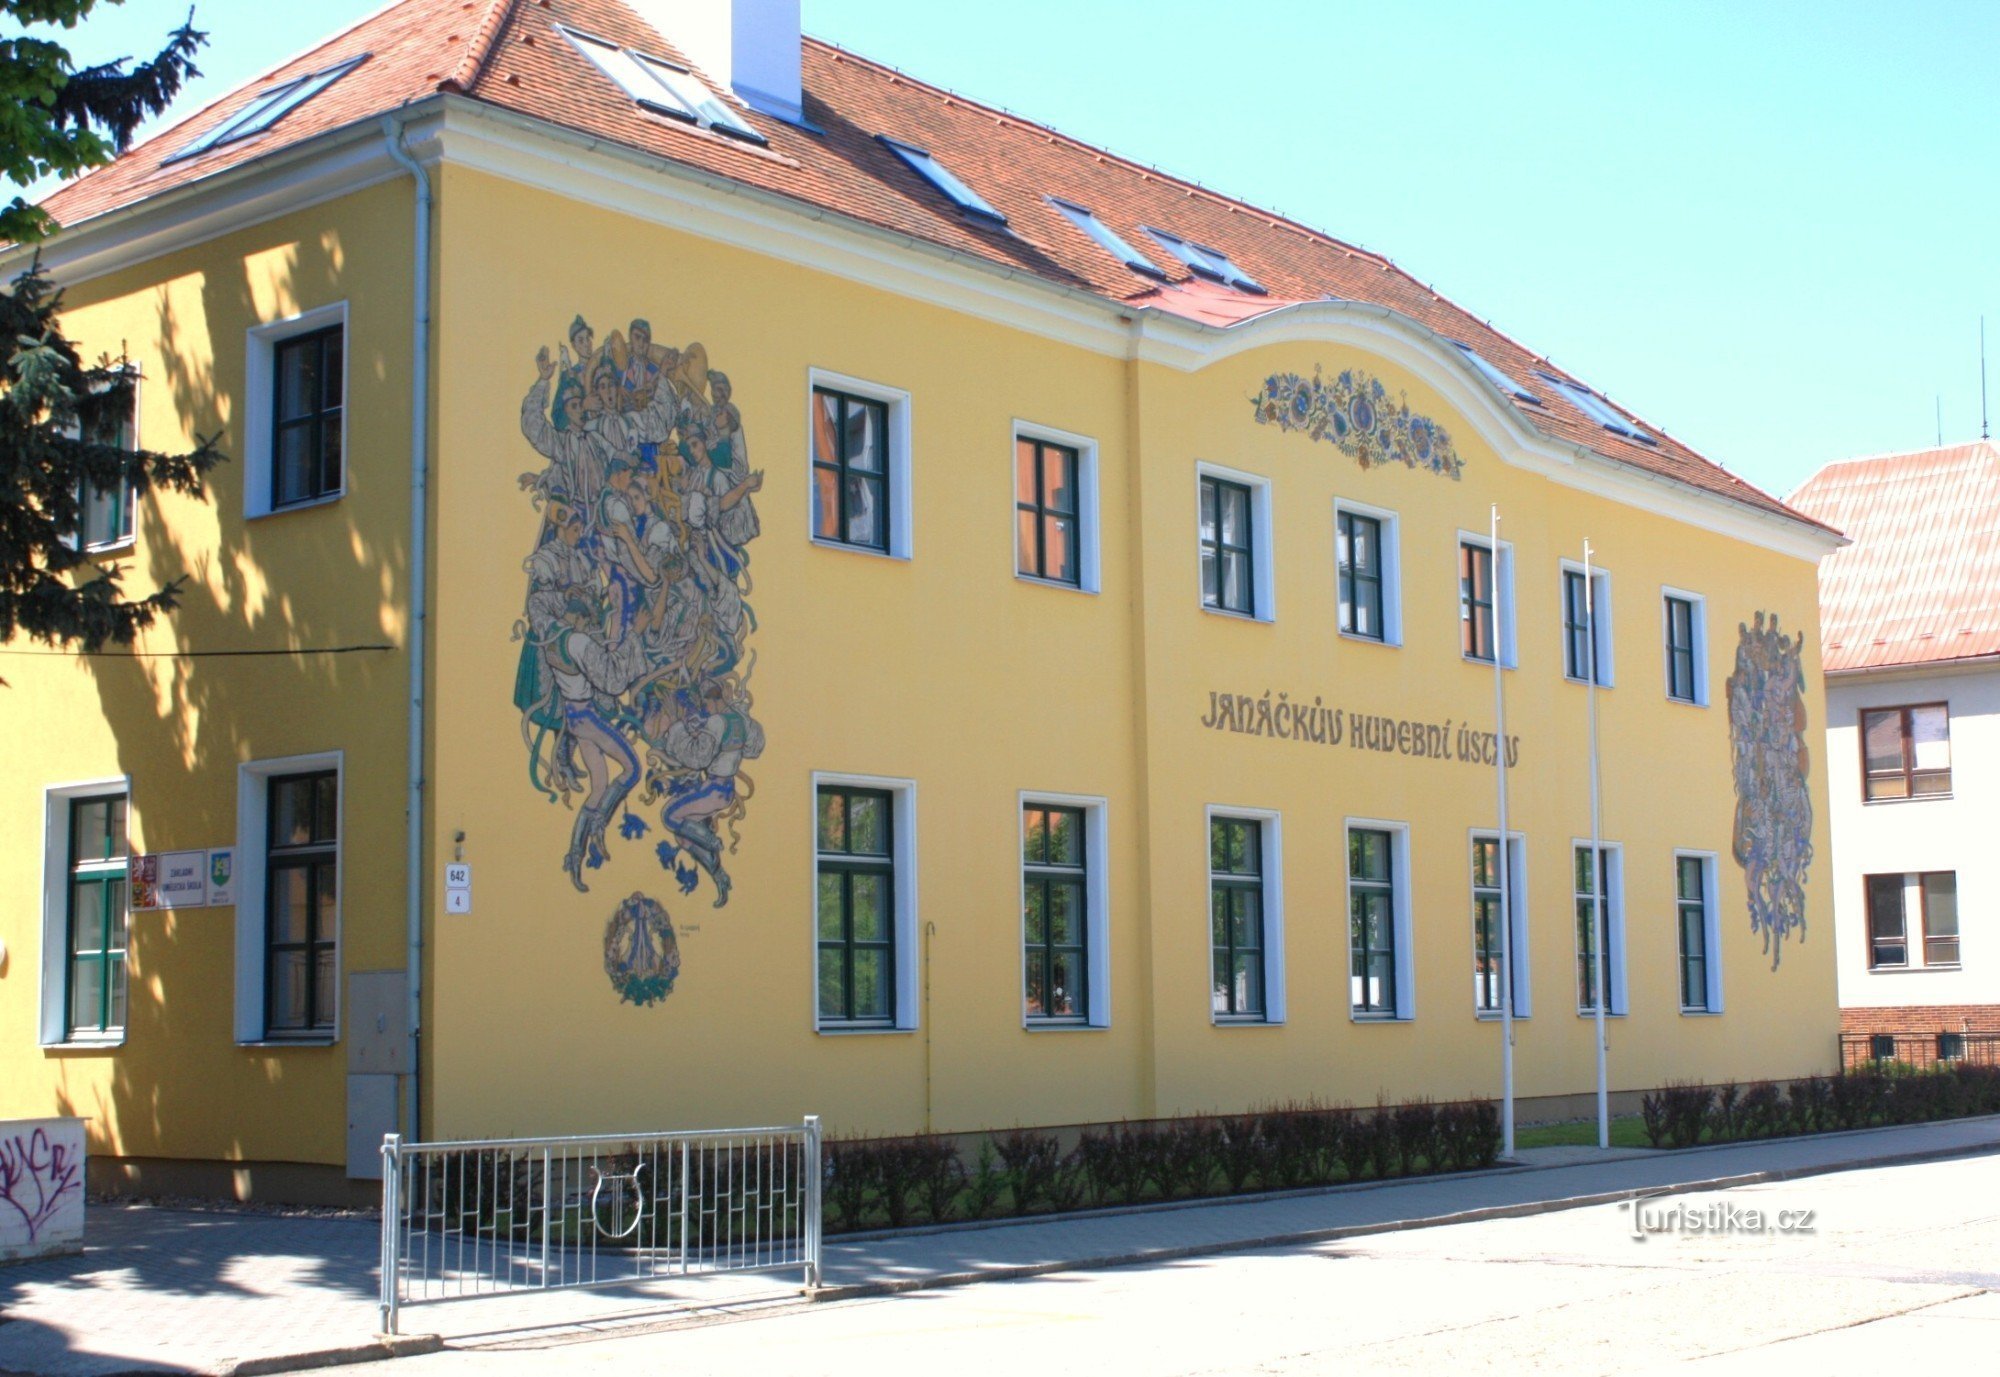 Břeclav - Janáčkův hudební ústav